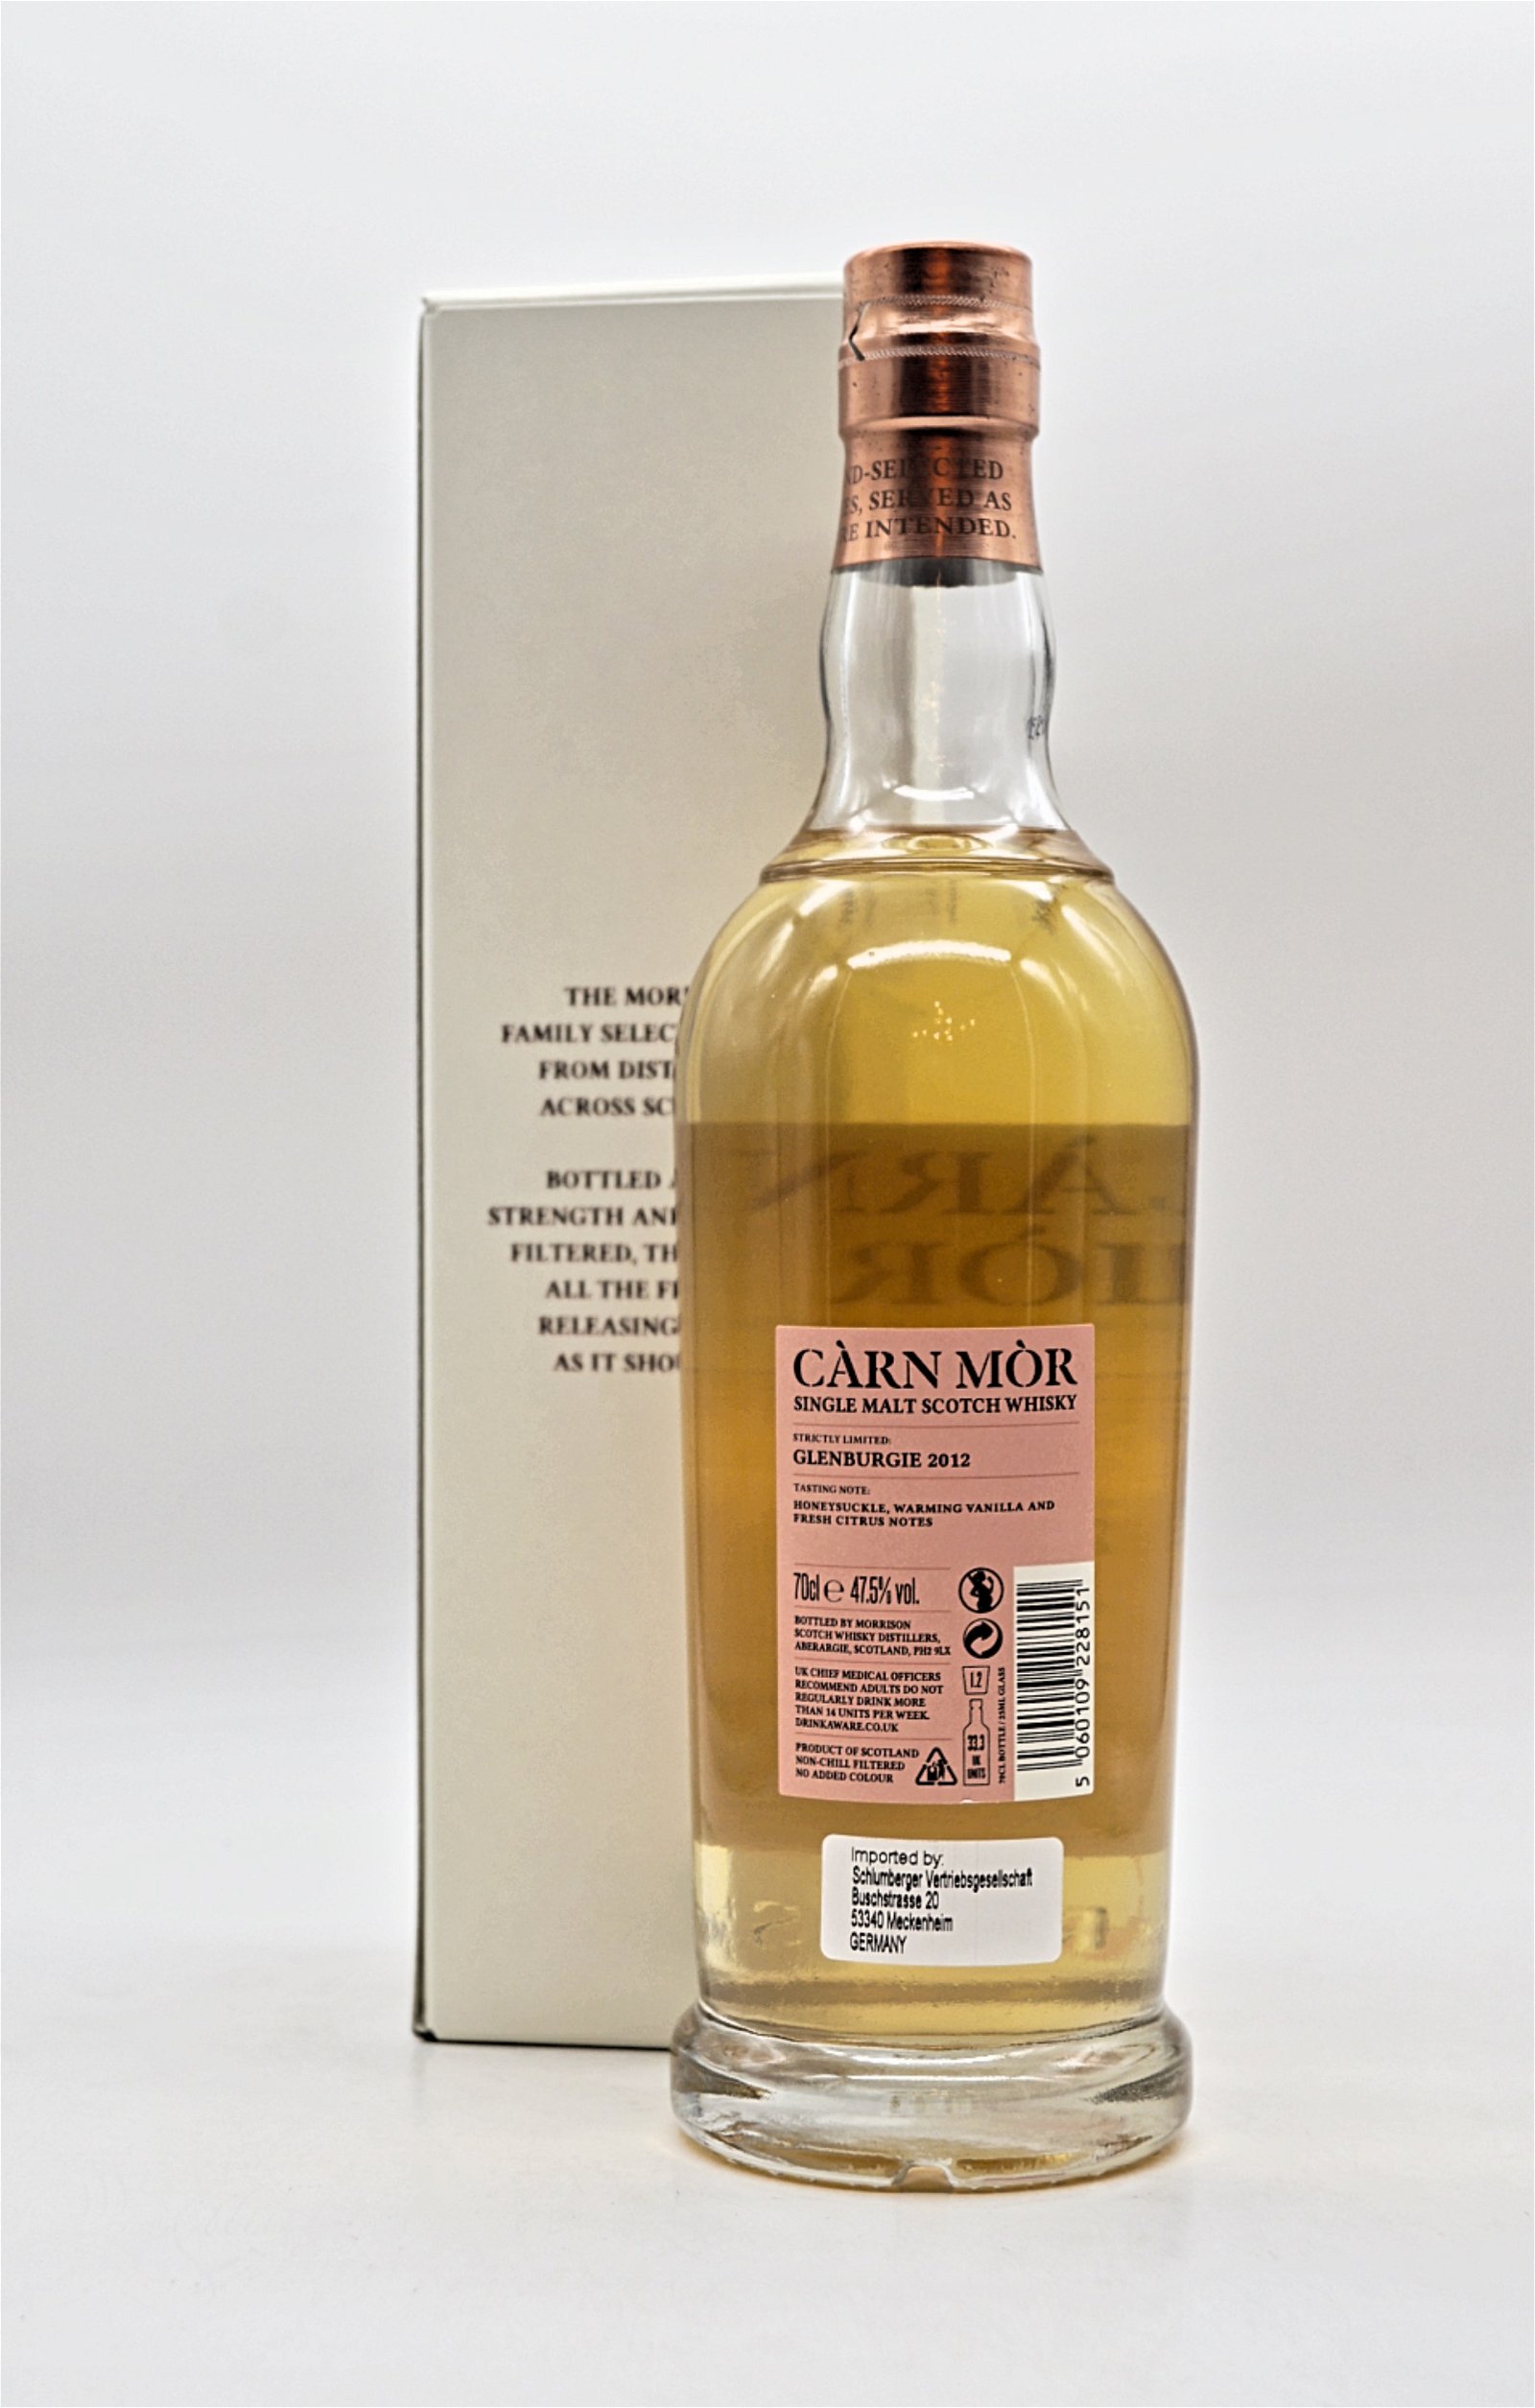 Carn Mor Glenburgie 2012 Bourbon Barrel Strictly Limited Single Malt Scotch Whisky